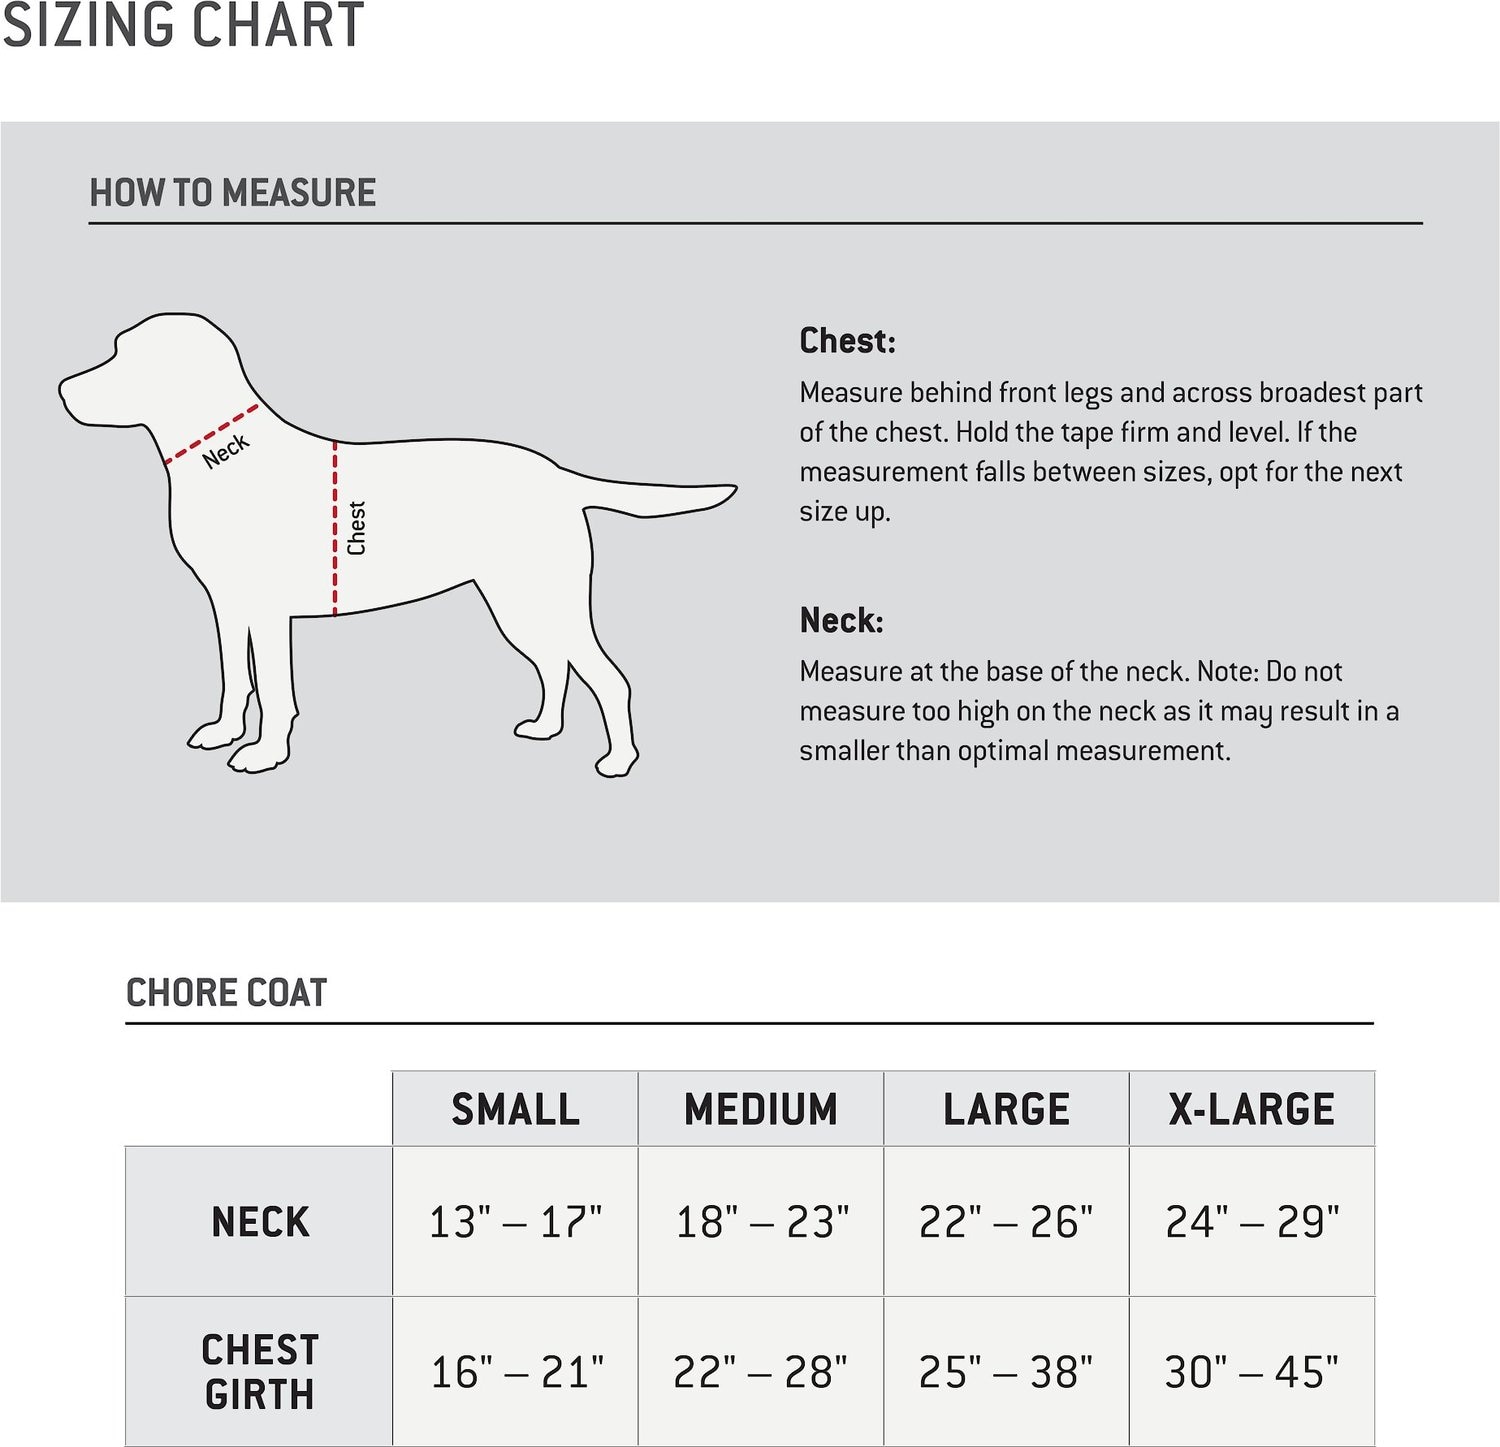 Dog Hunting Vest Size Chart